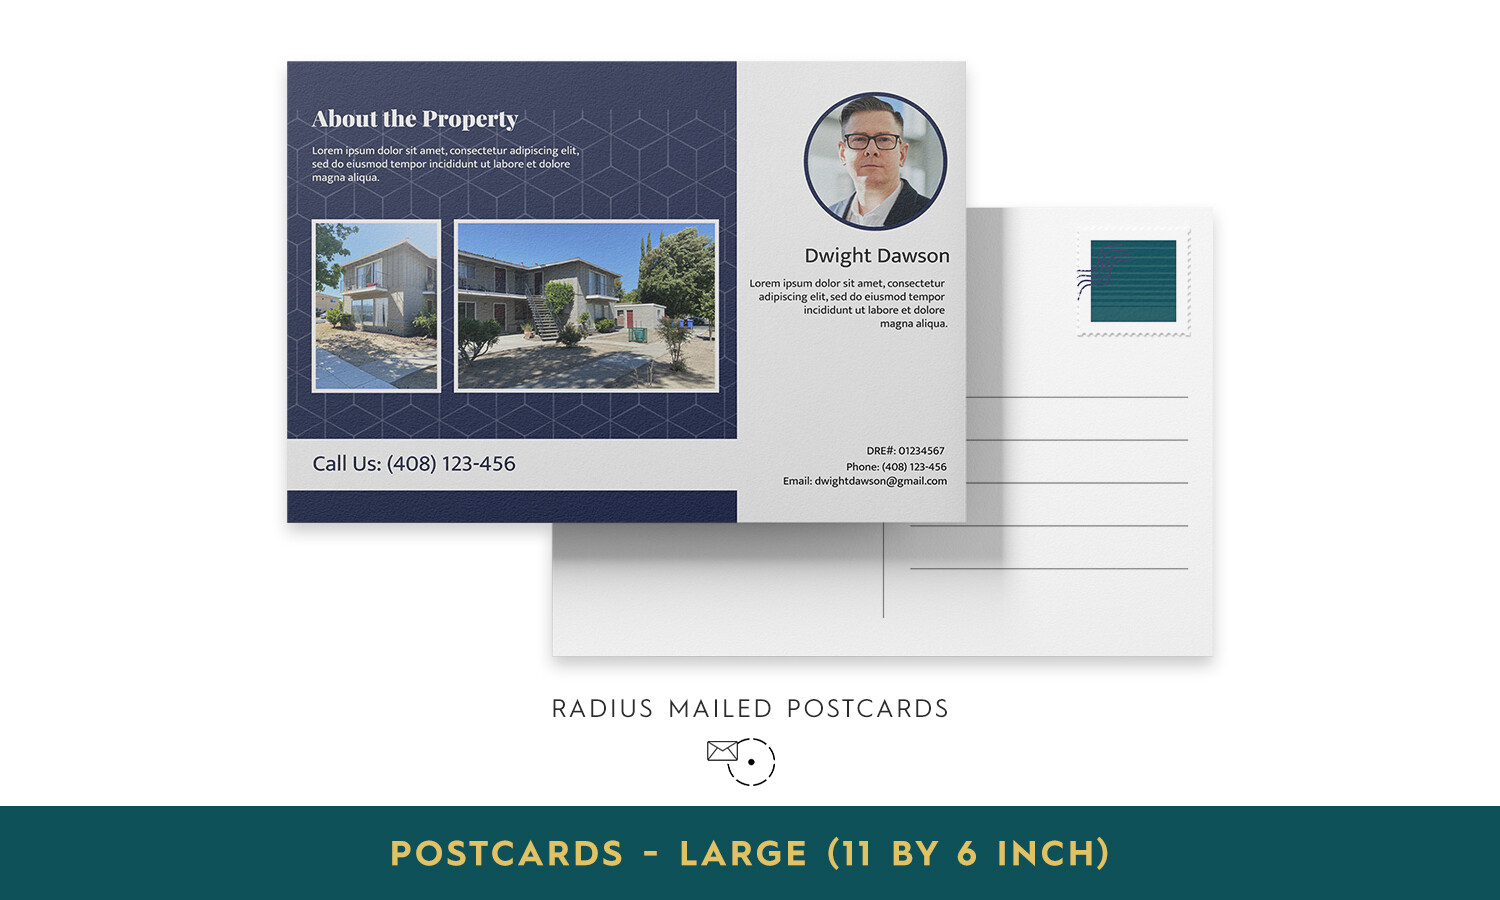 Radius Mailed Postcards - Large